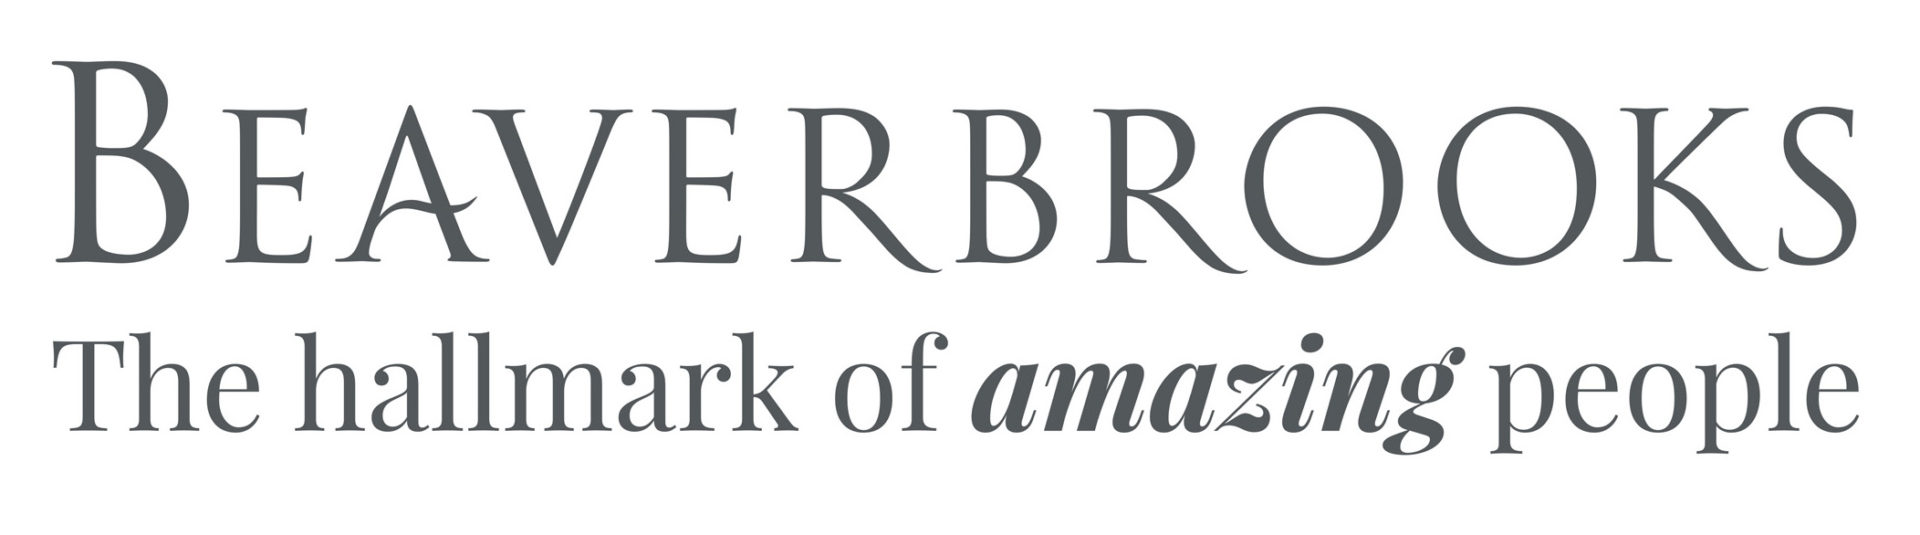 Beaverbrooks logo and strapline 1